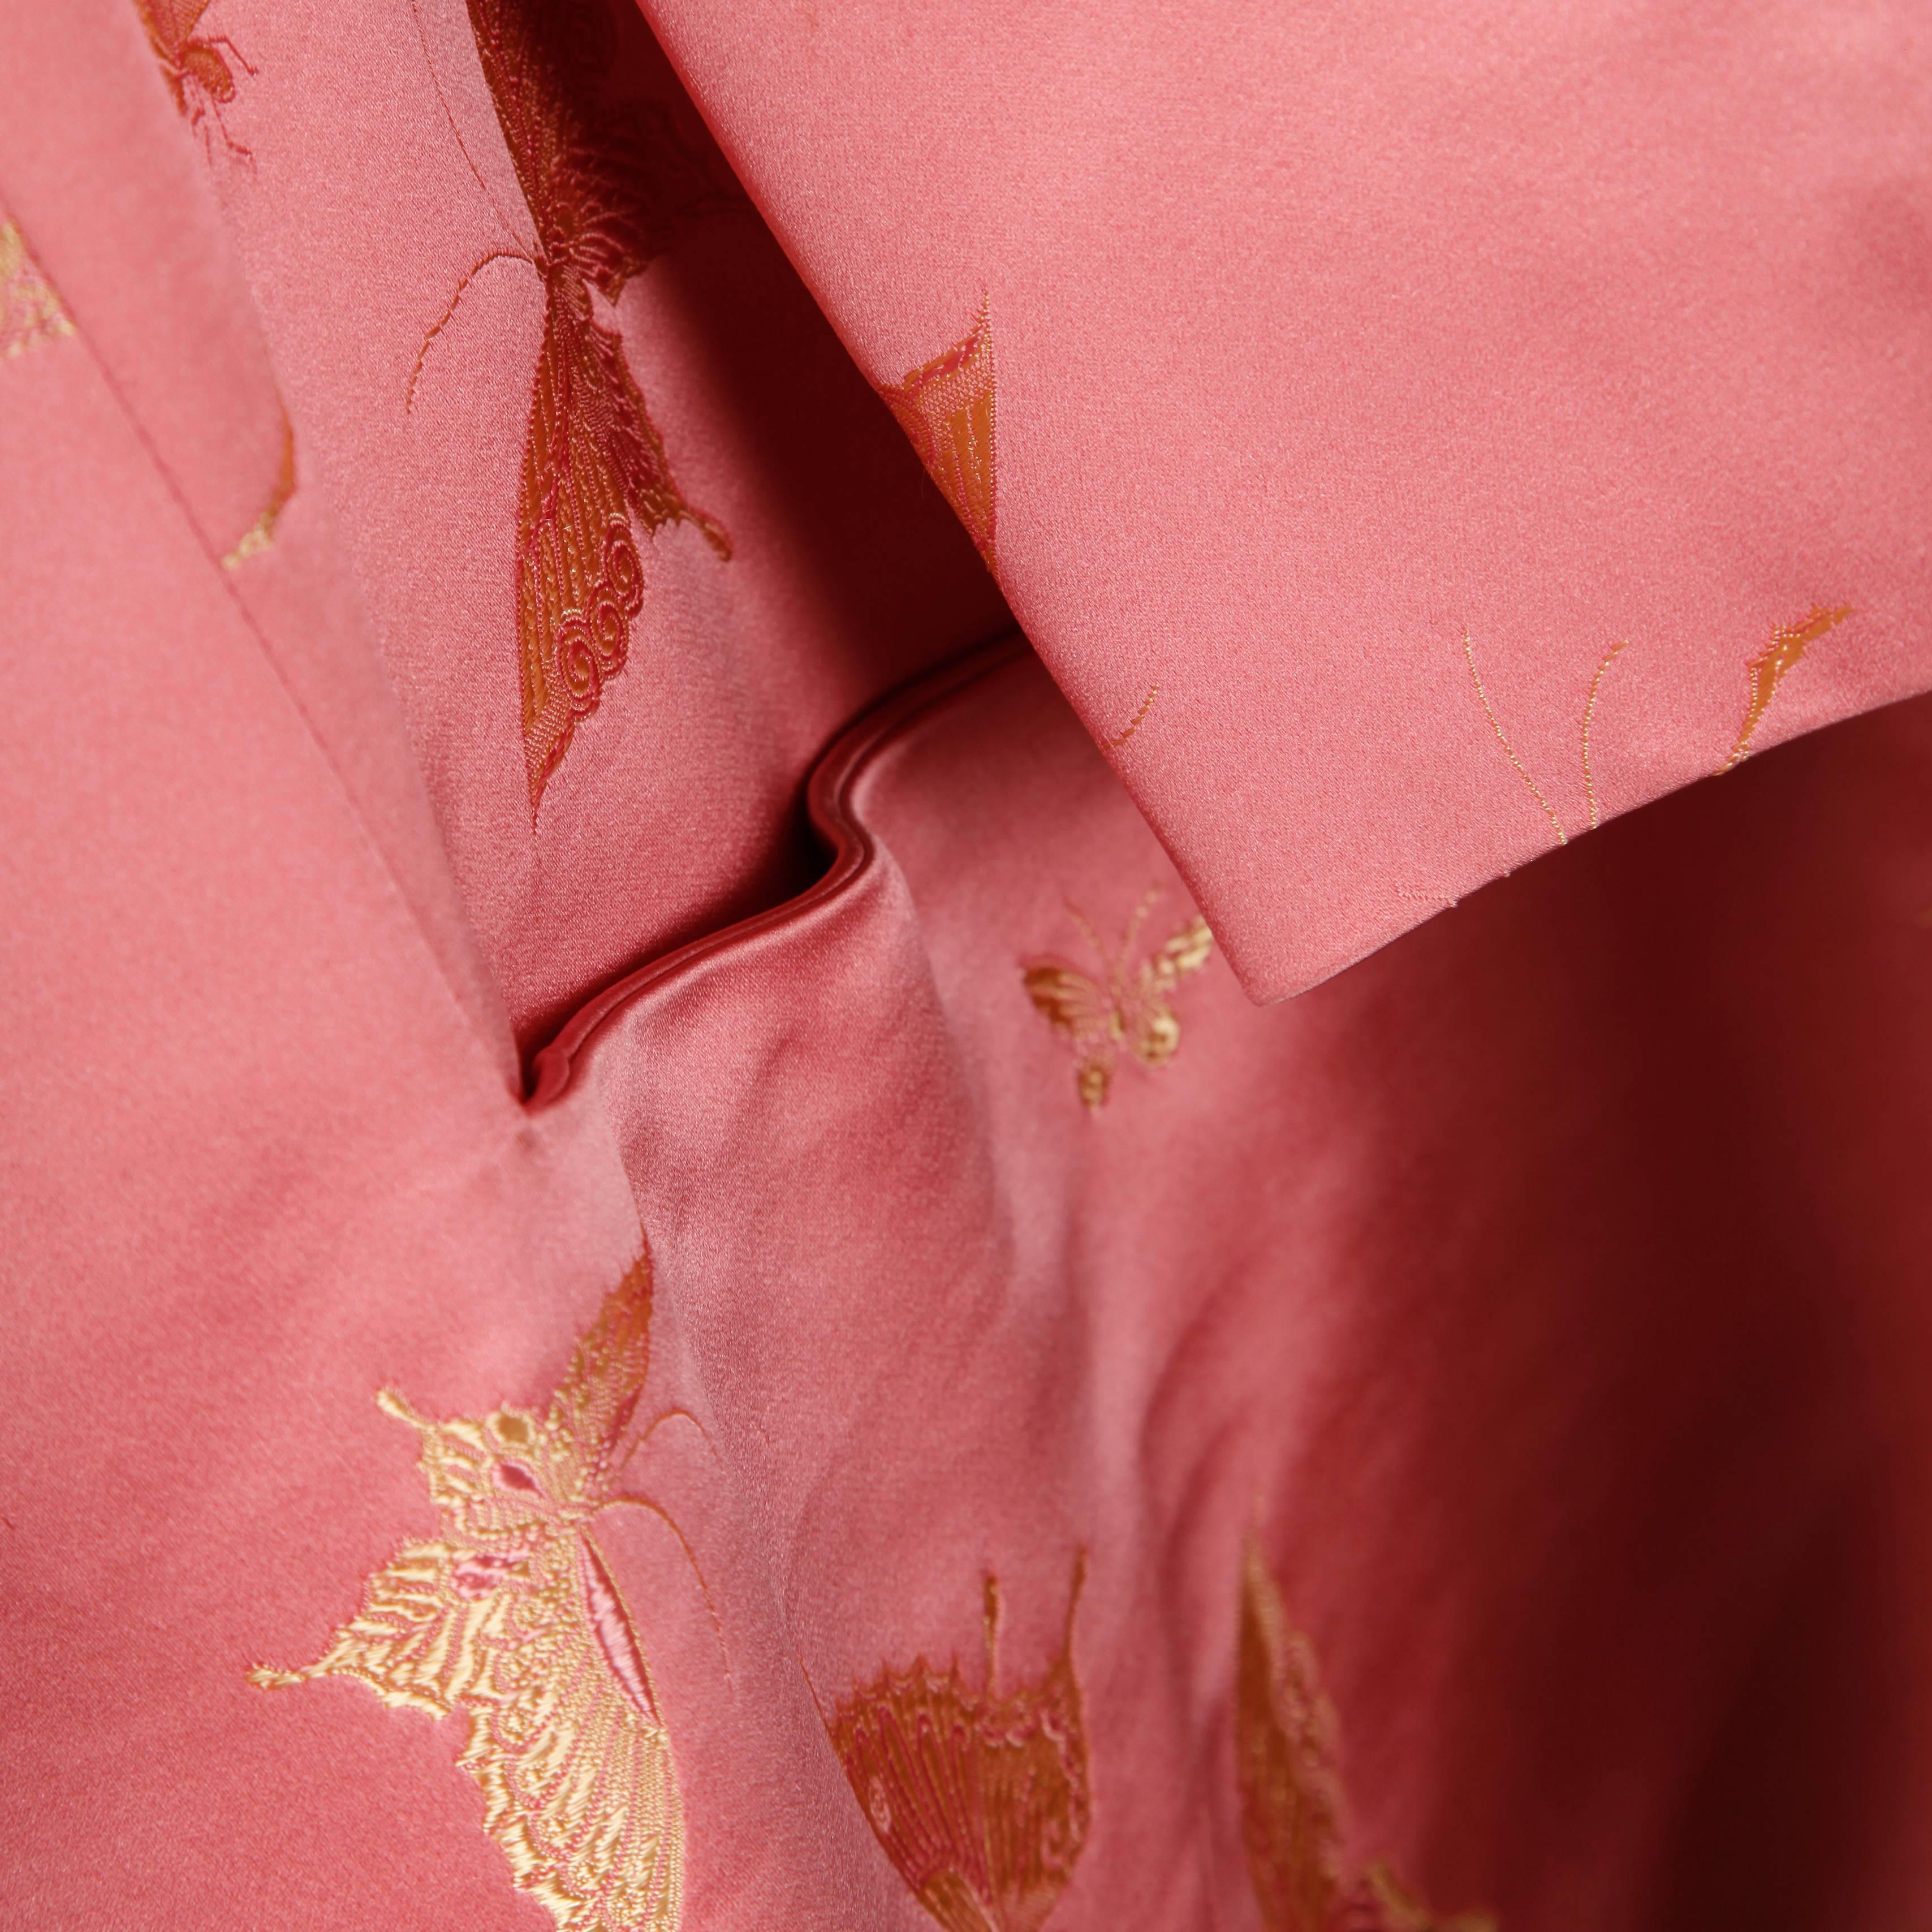 Women's Dynasty Vintage 1960s Pink Silk Satin Swing Coat with Gold Butterflies